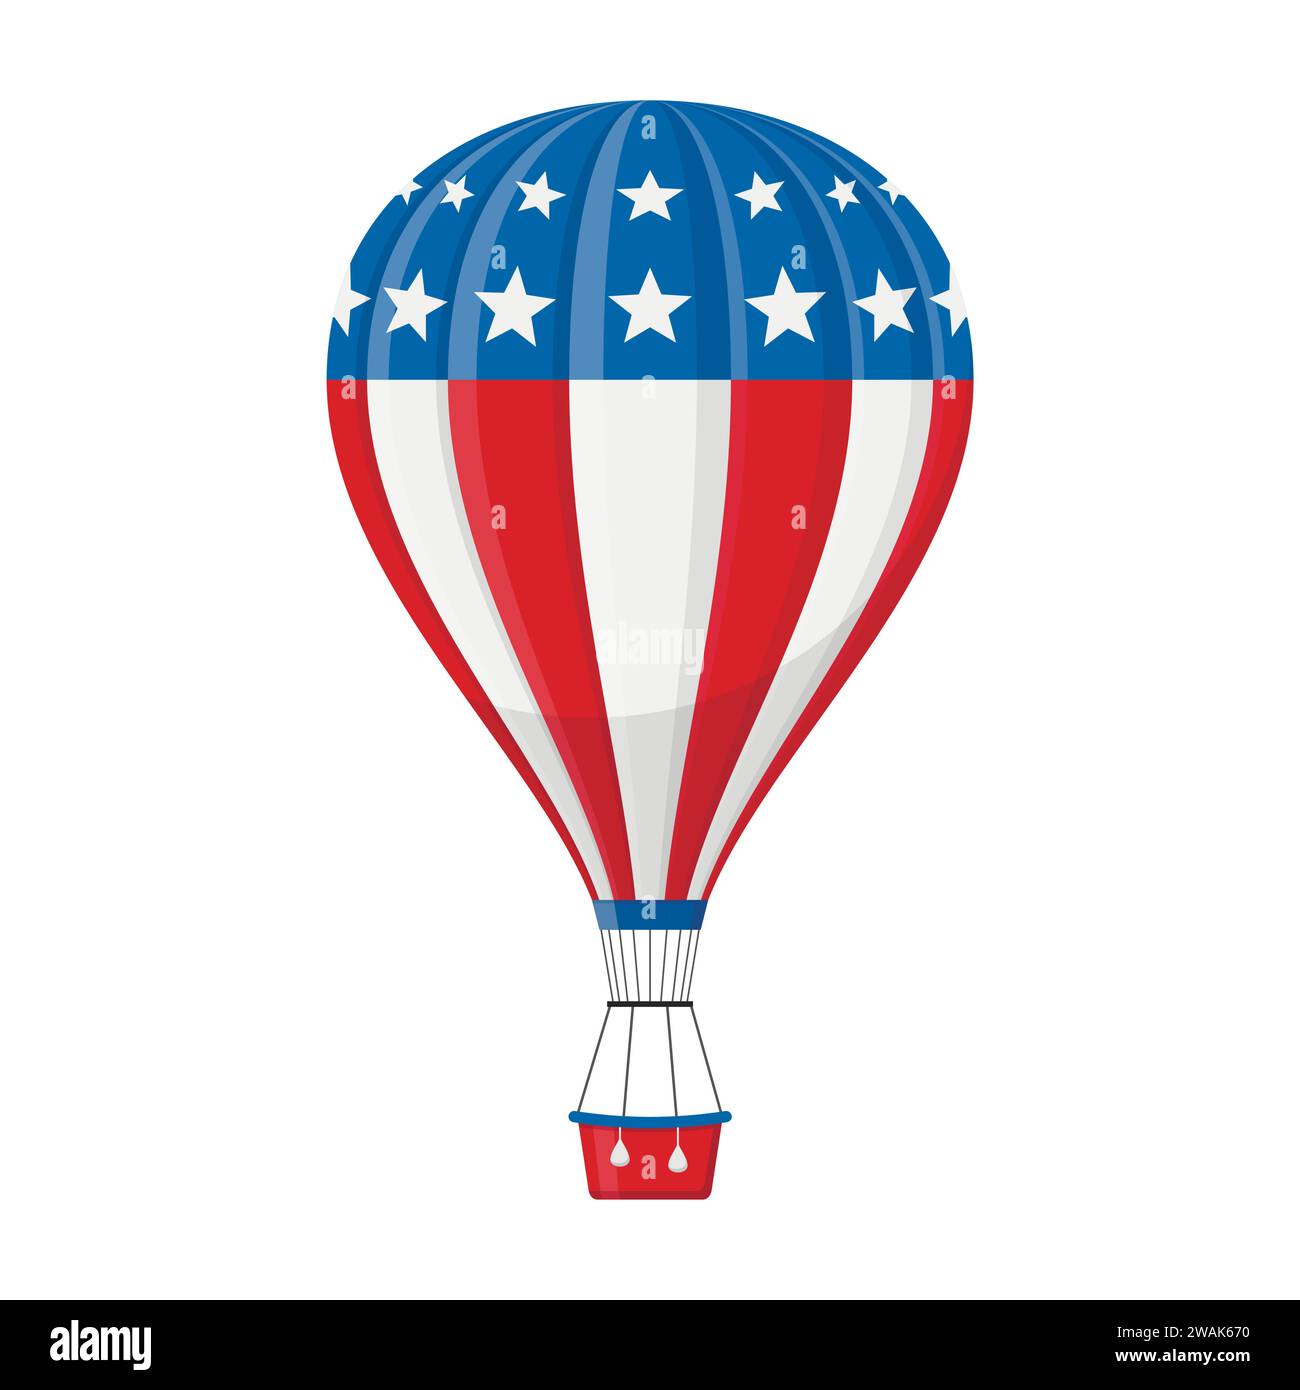 Aerostat Balloon usa flag transport with basket icon isolated on white background, Cartoon american ballooning adventure flight, ballooned traveling f Stock Vector